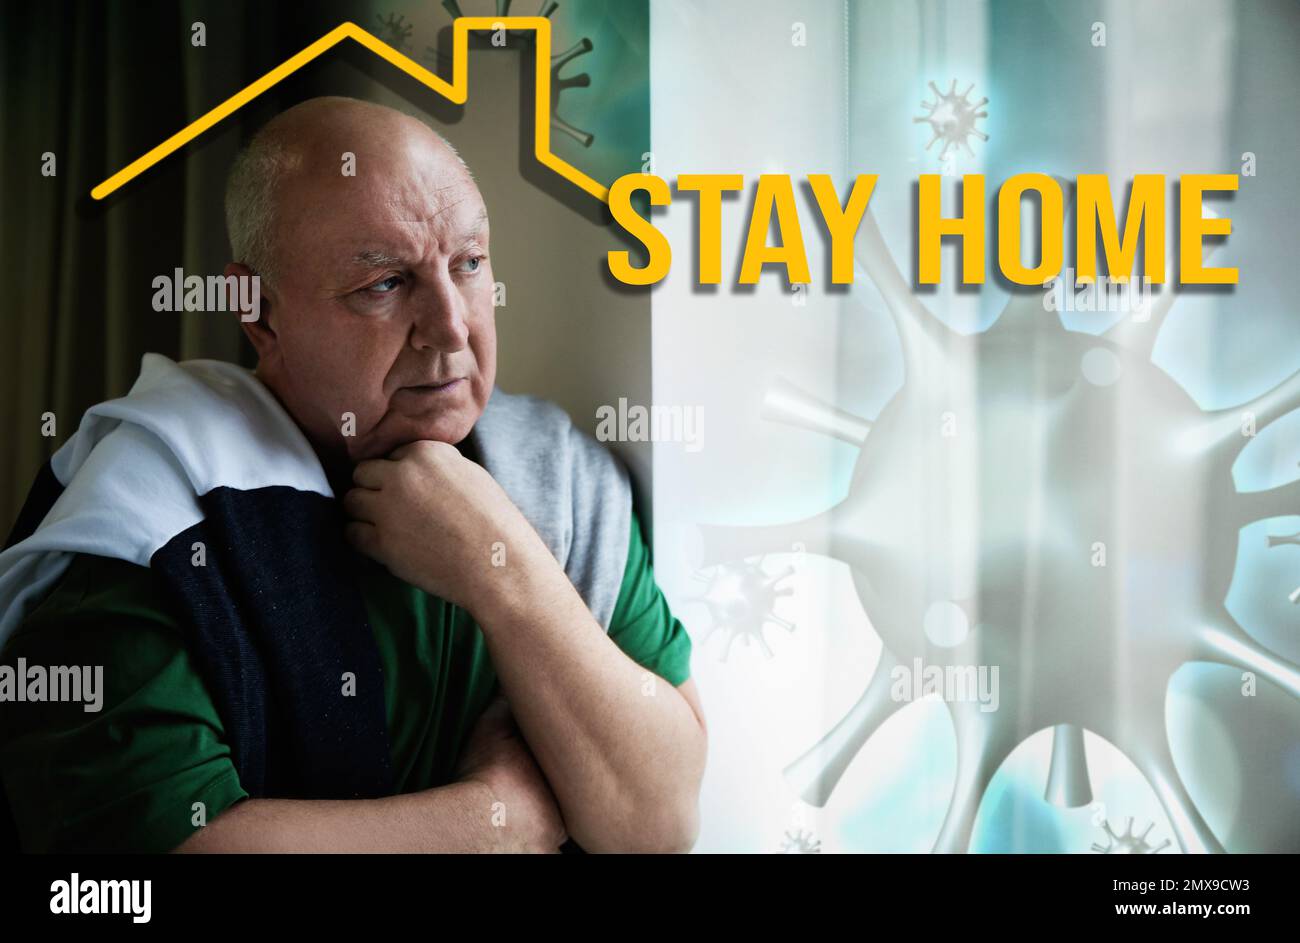 Stay at home during coronavirus outbreak. Senior man near window in room Stock Photo